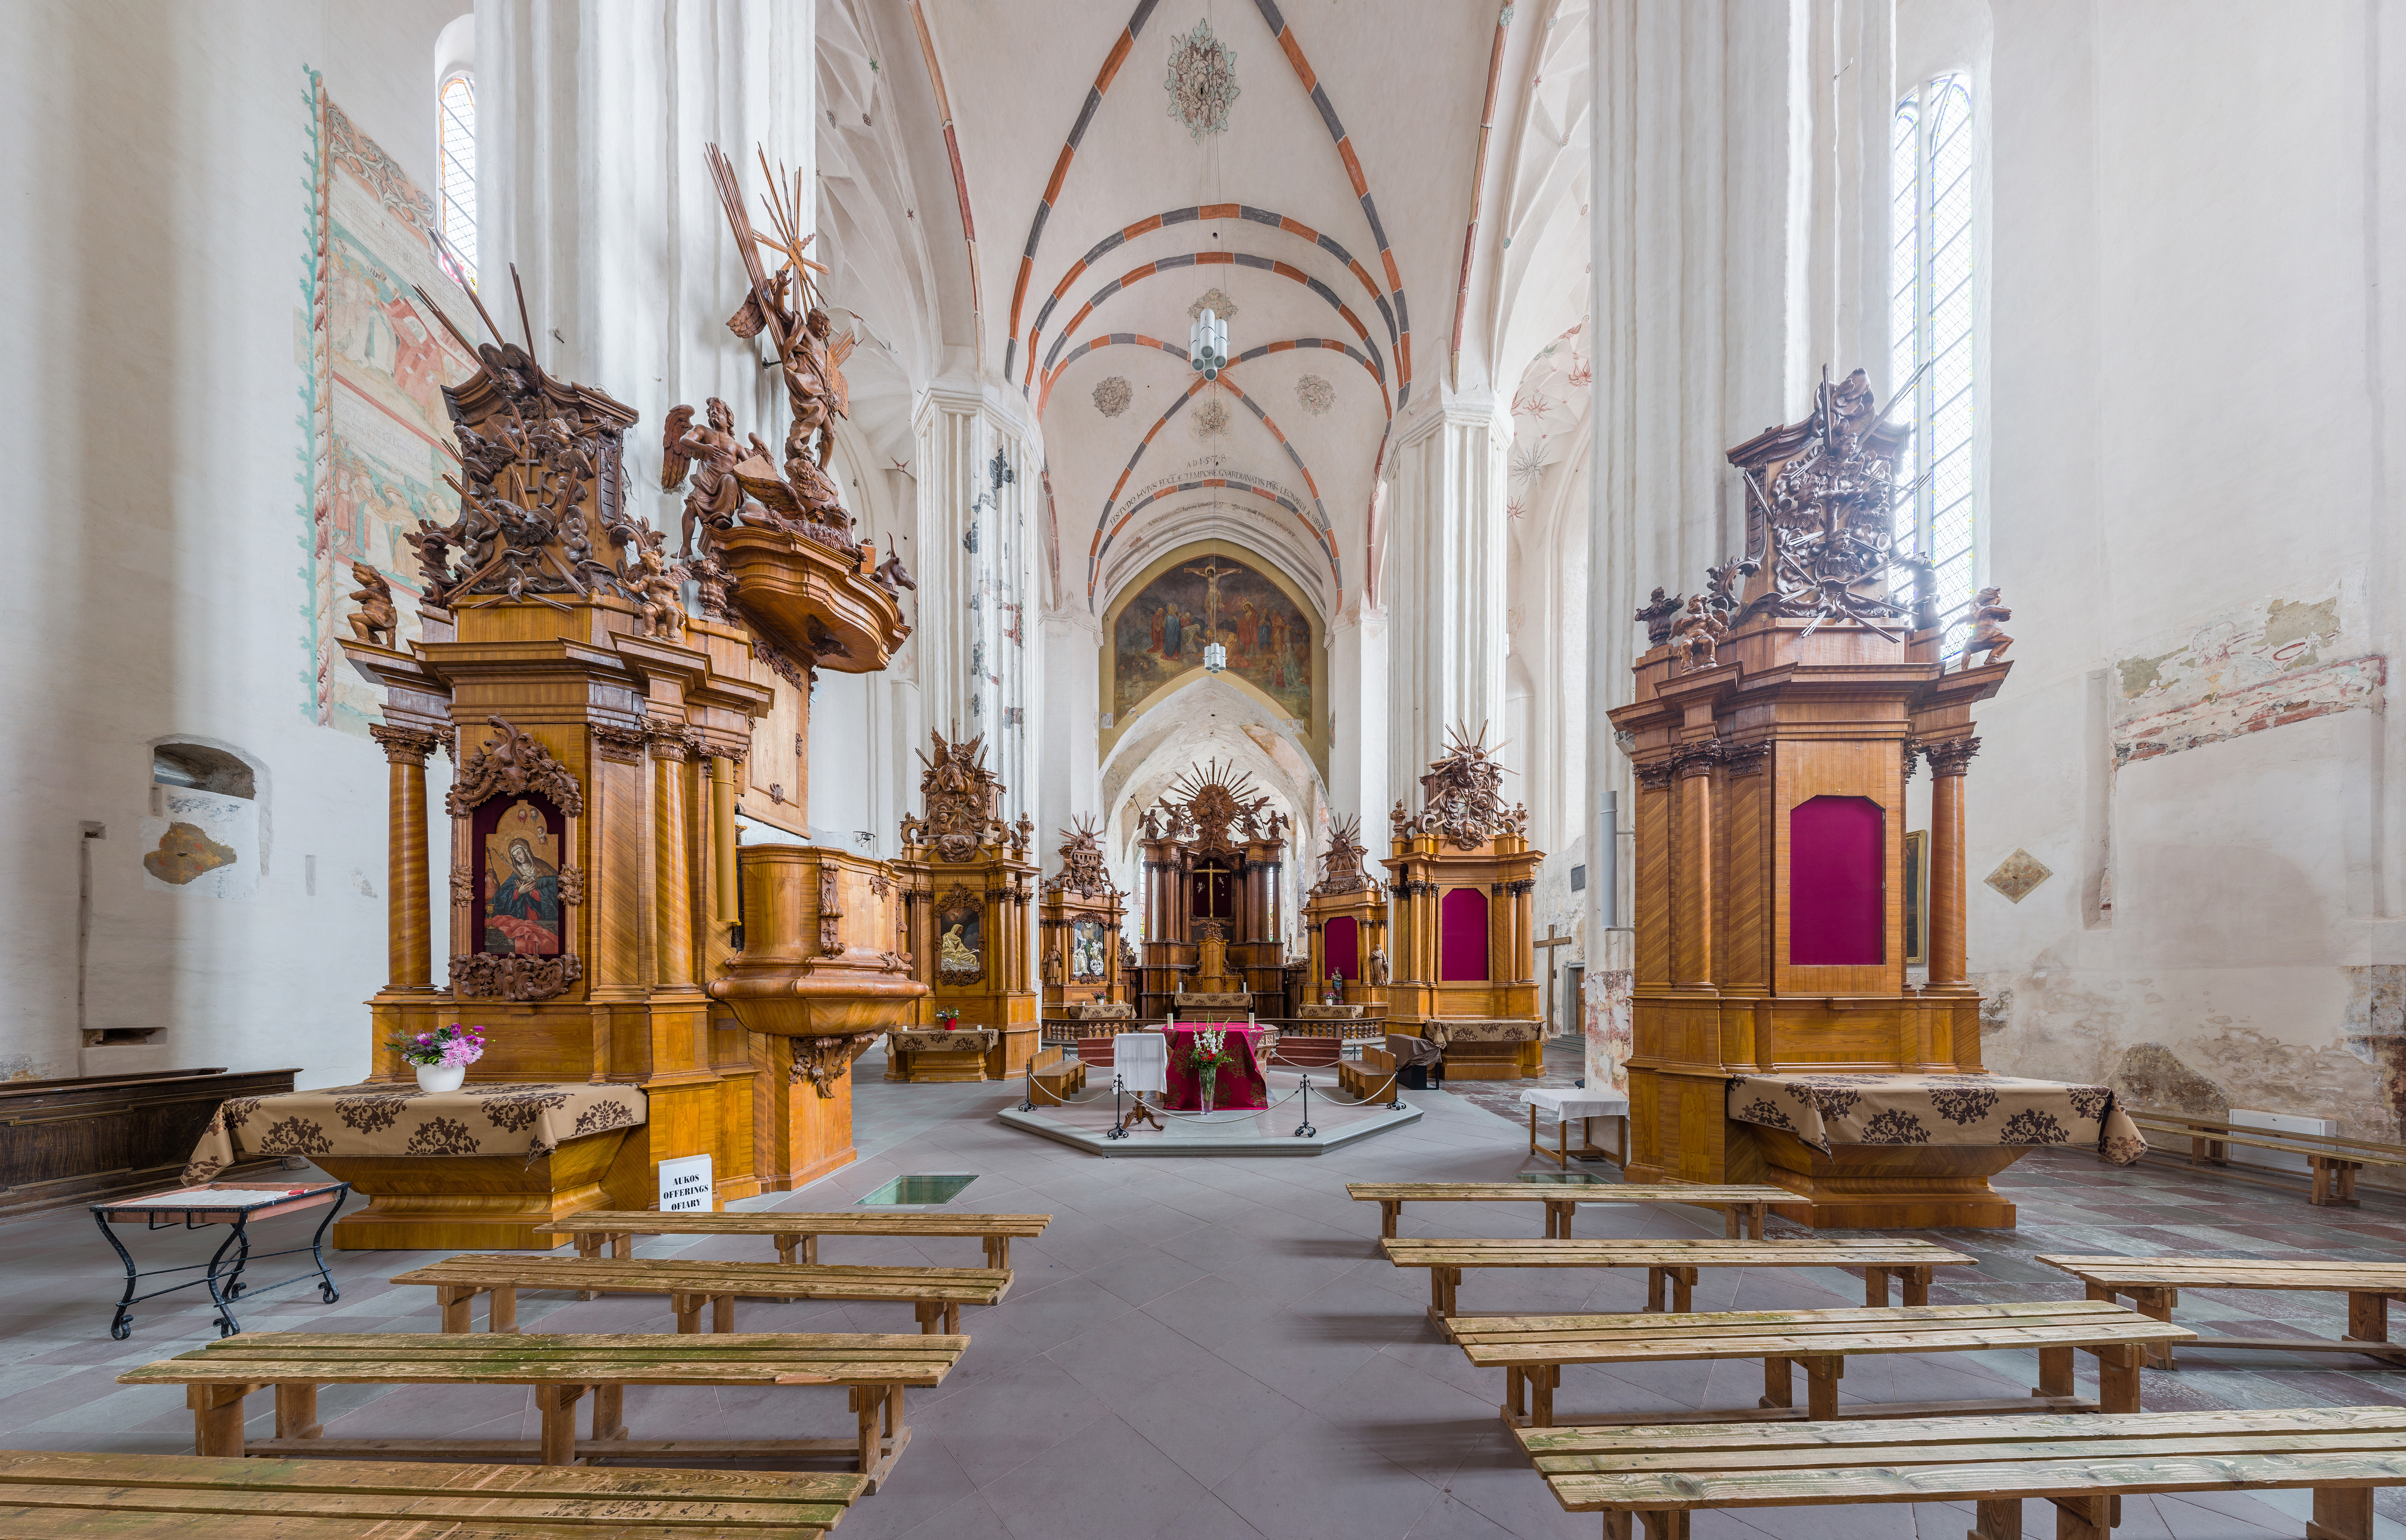 St_Francis_and_Bernardine_Monastery_Church_Interior_2%2C_Vilnius%2C_Lithuania_-_Diliff.jpg